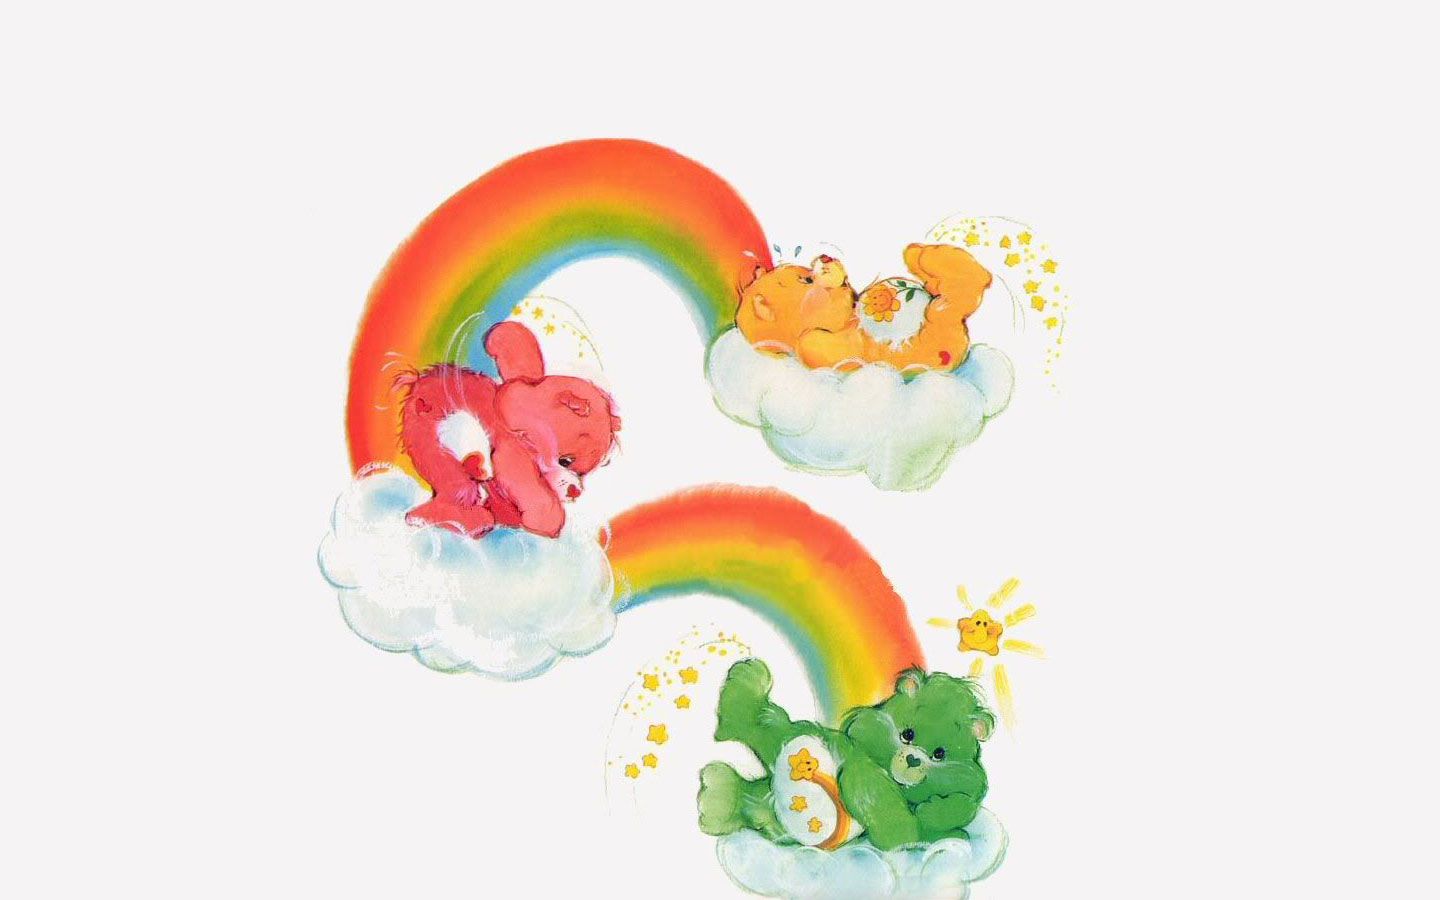 Care bears on a rainbow wallpaper - Care Bears